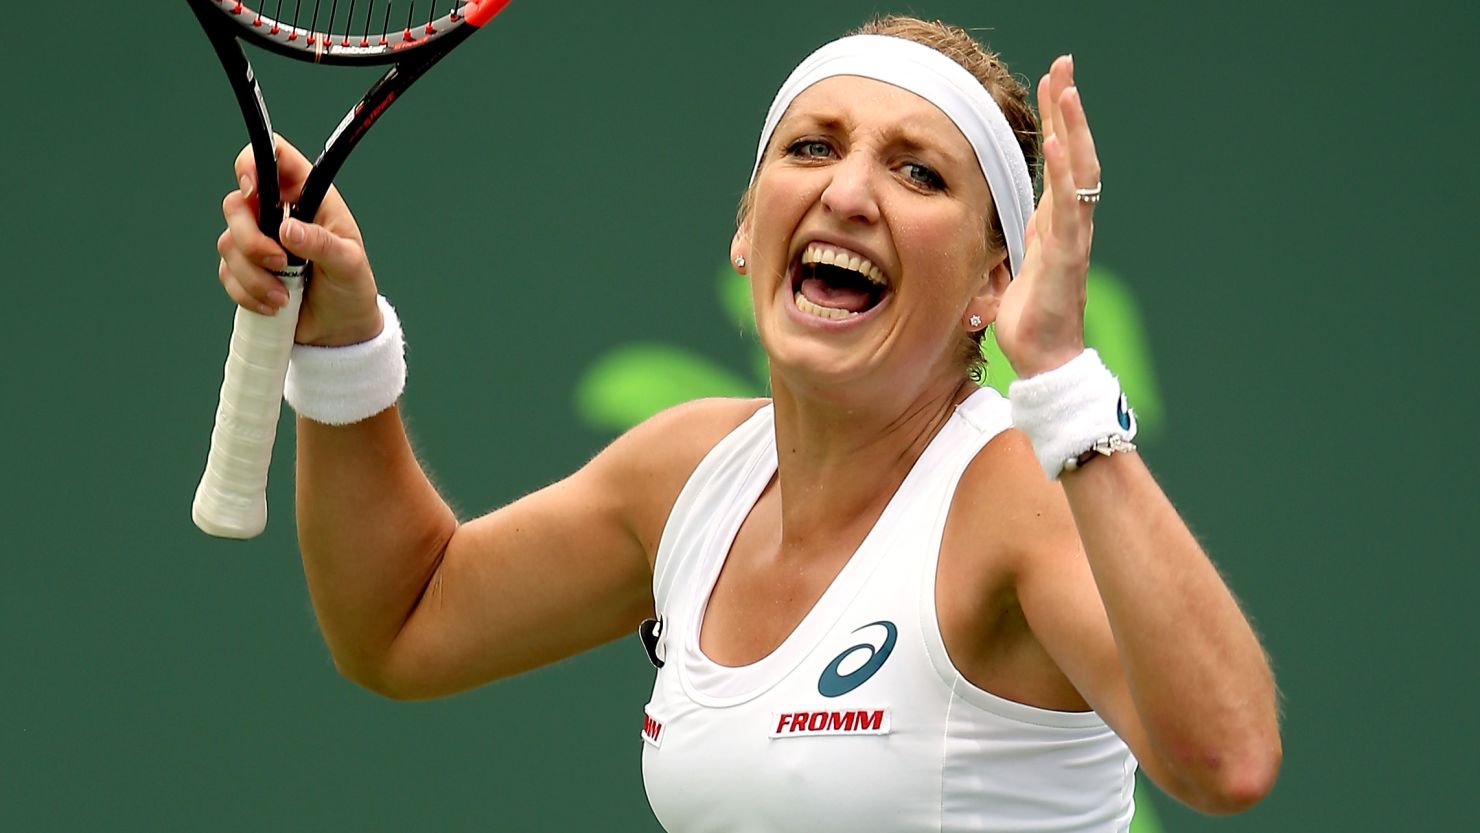 Timea Bacsinszky celebrates her victory over Agnieszka Radwanska at the Miami Open.